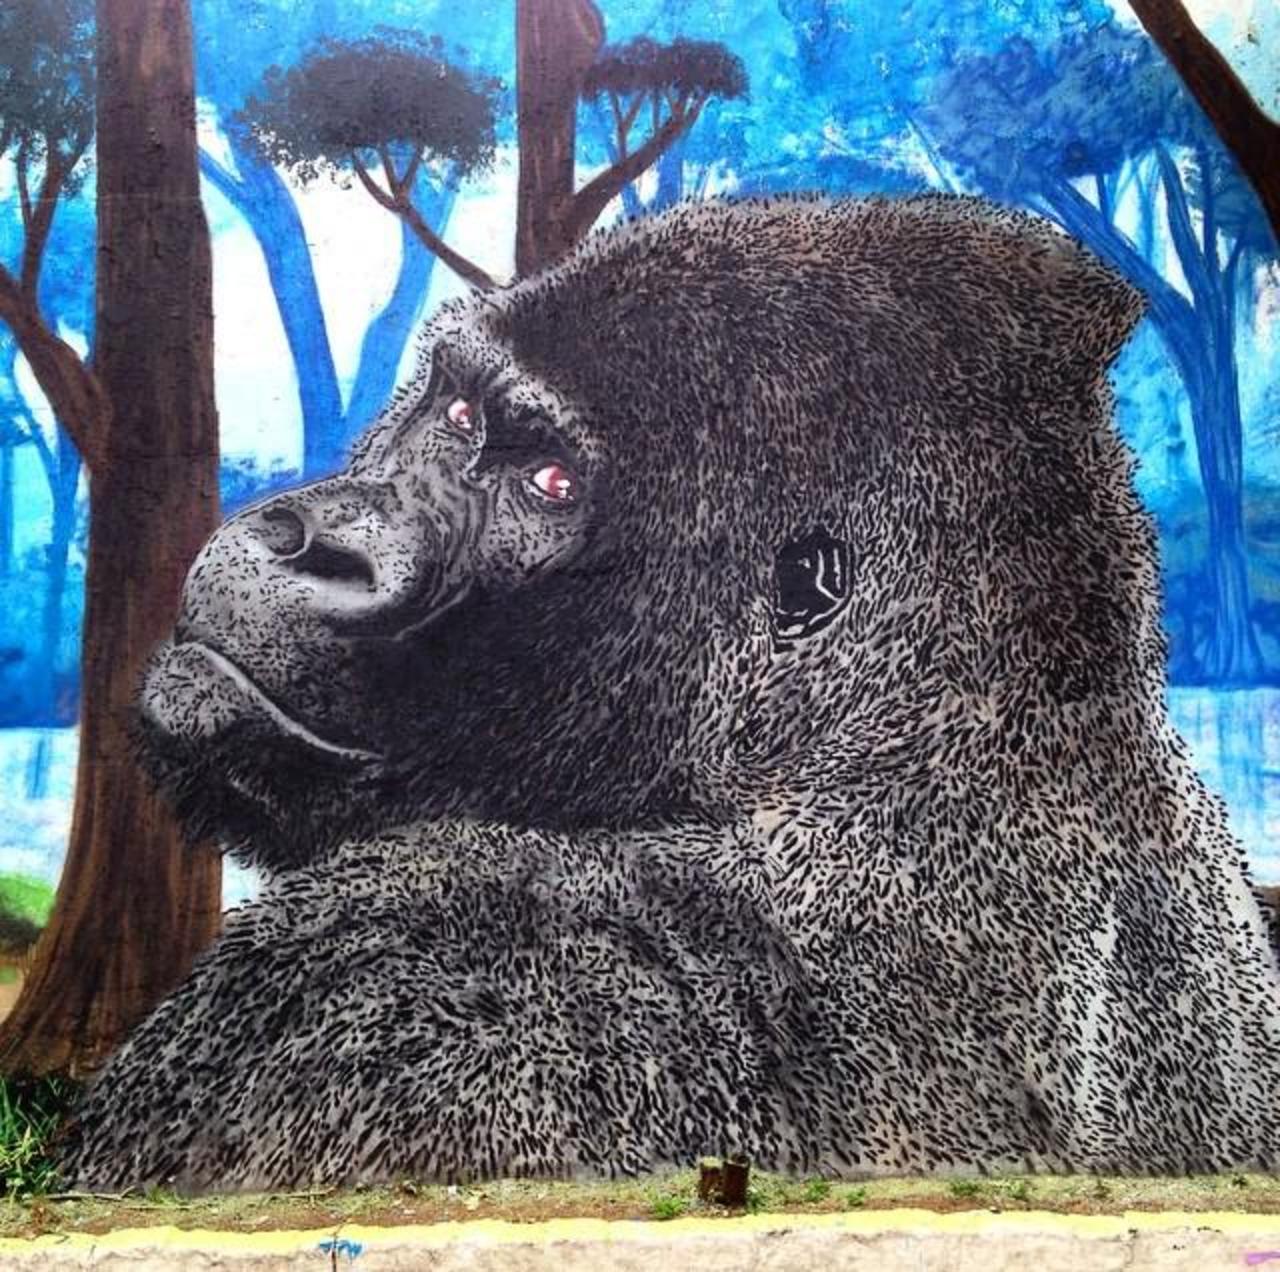 Superb Nature in Street Art piece by Thassio in São Paulo, Brazil  

#art #mural #graffiti #streetart http://t.co/TXU0BC2AAZ